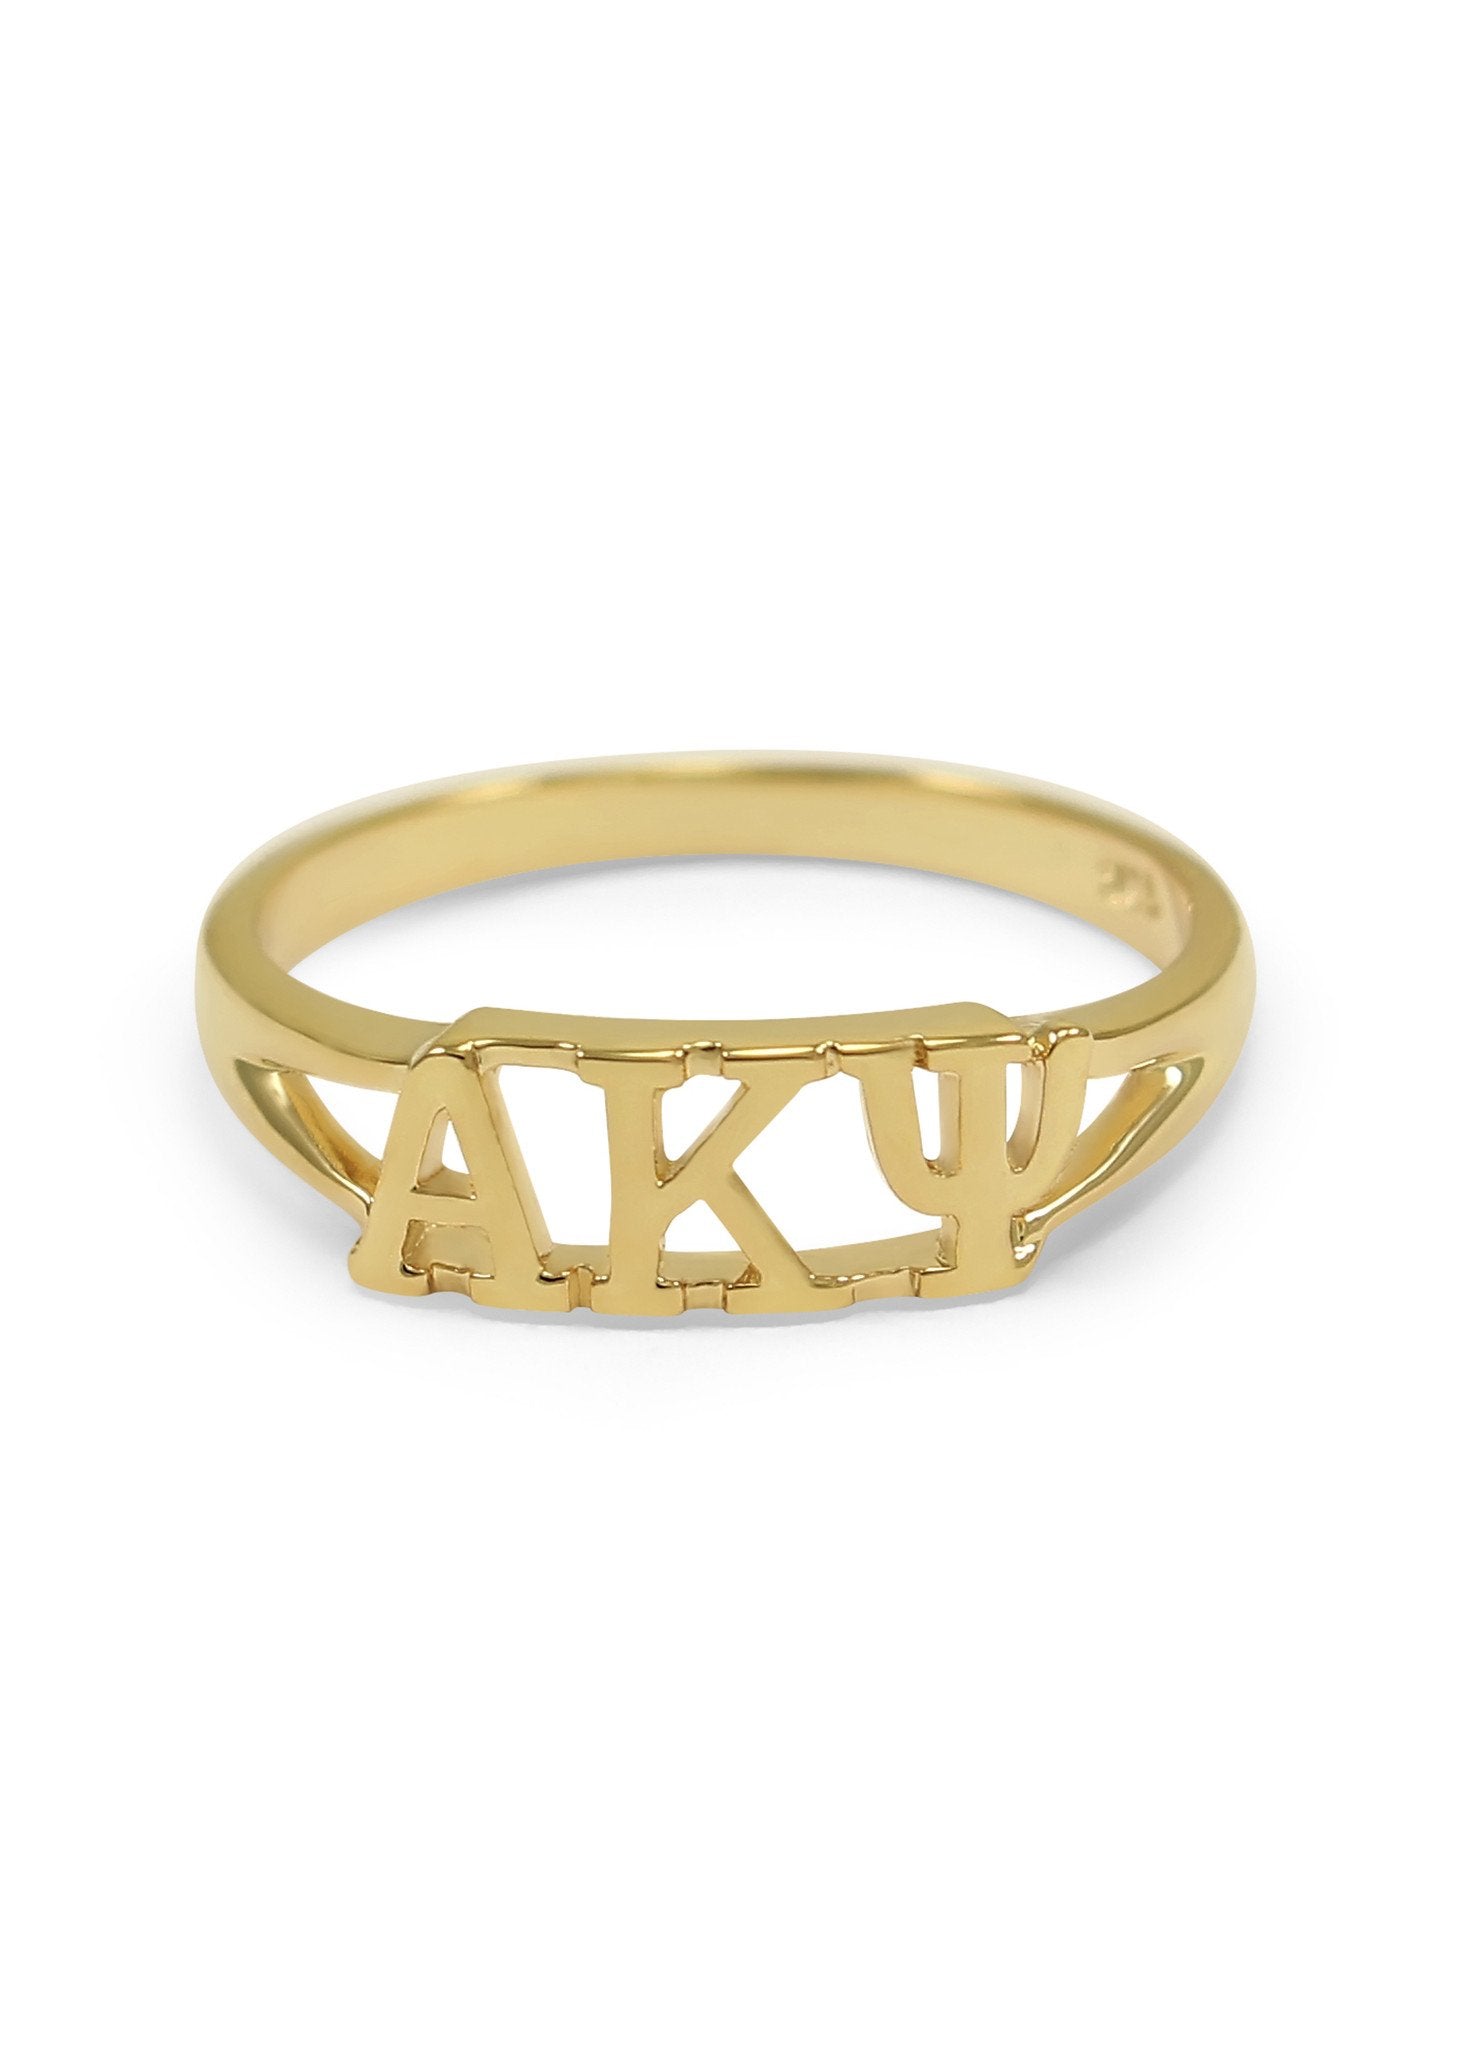 Zeta Tau Alpha Sterling Silver Ring with Pave Cubic Zirconia Greek Letters  - Greek Gear